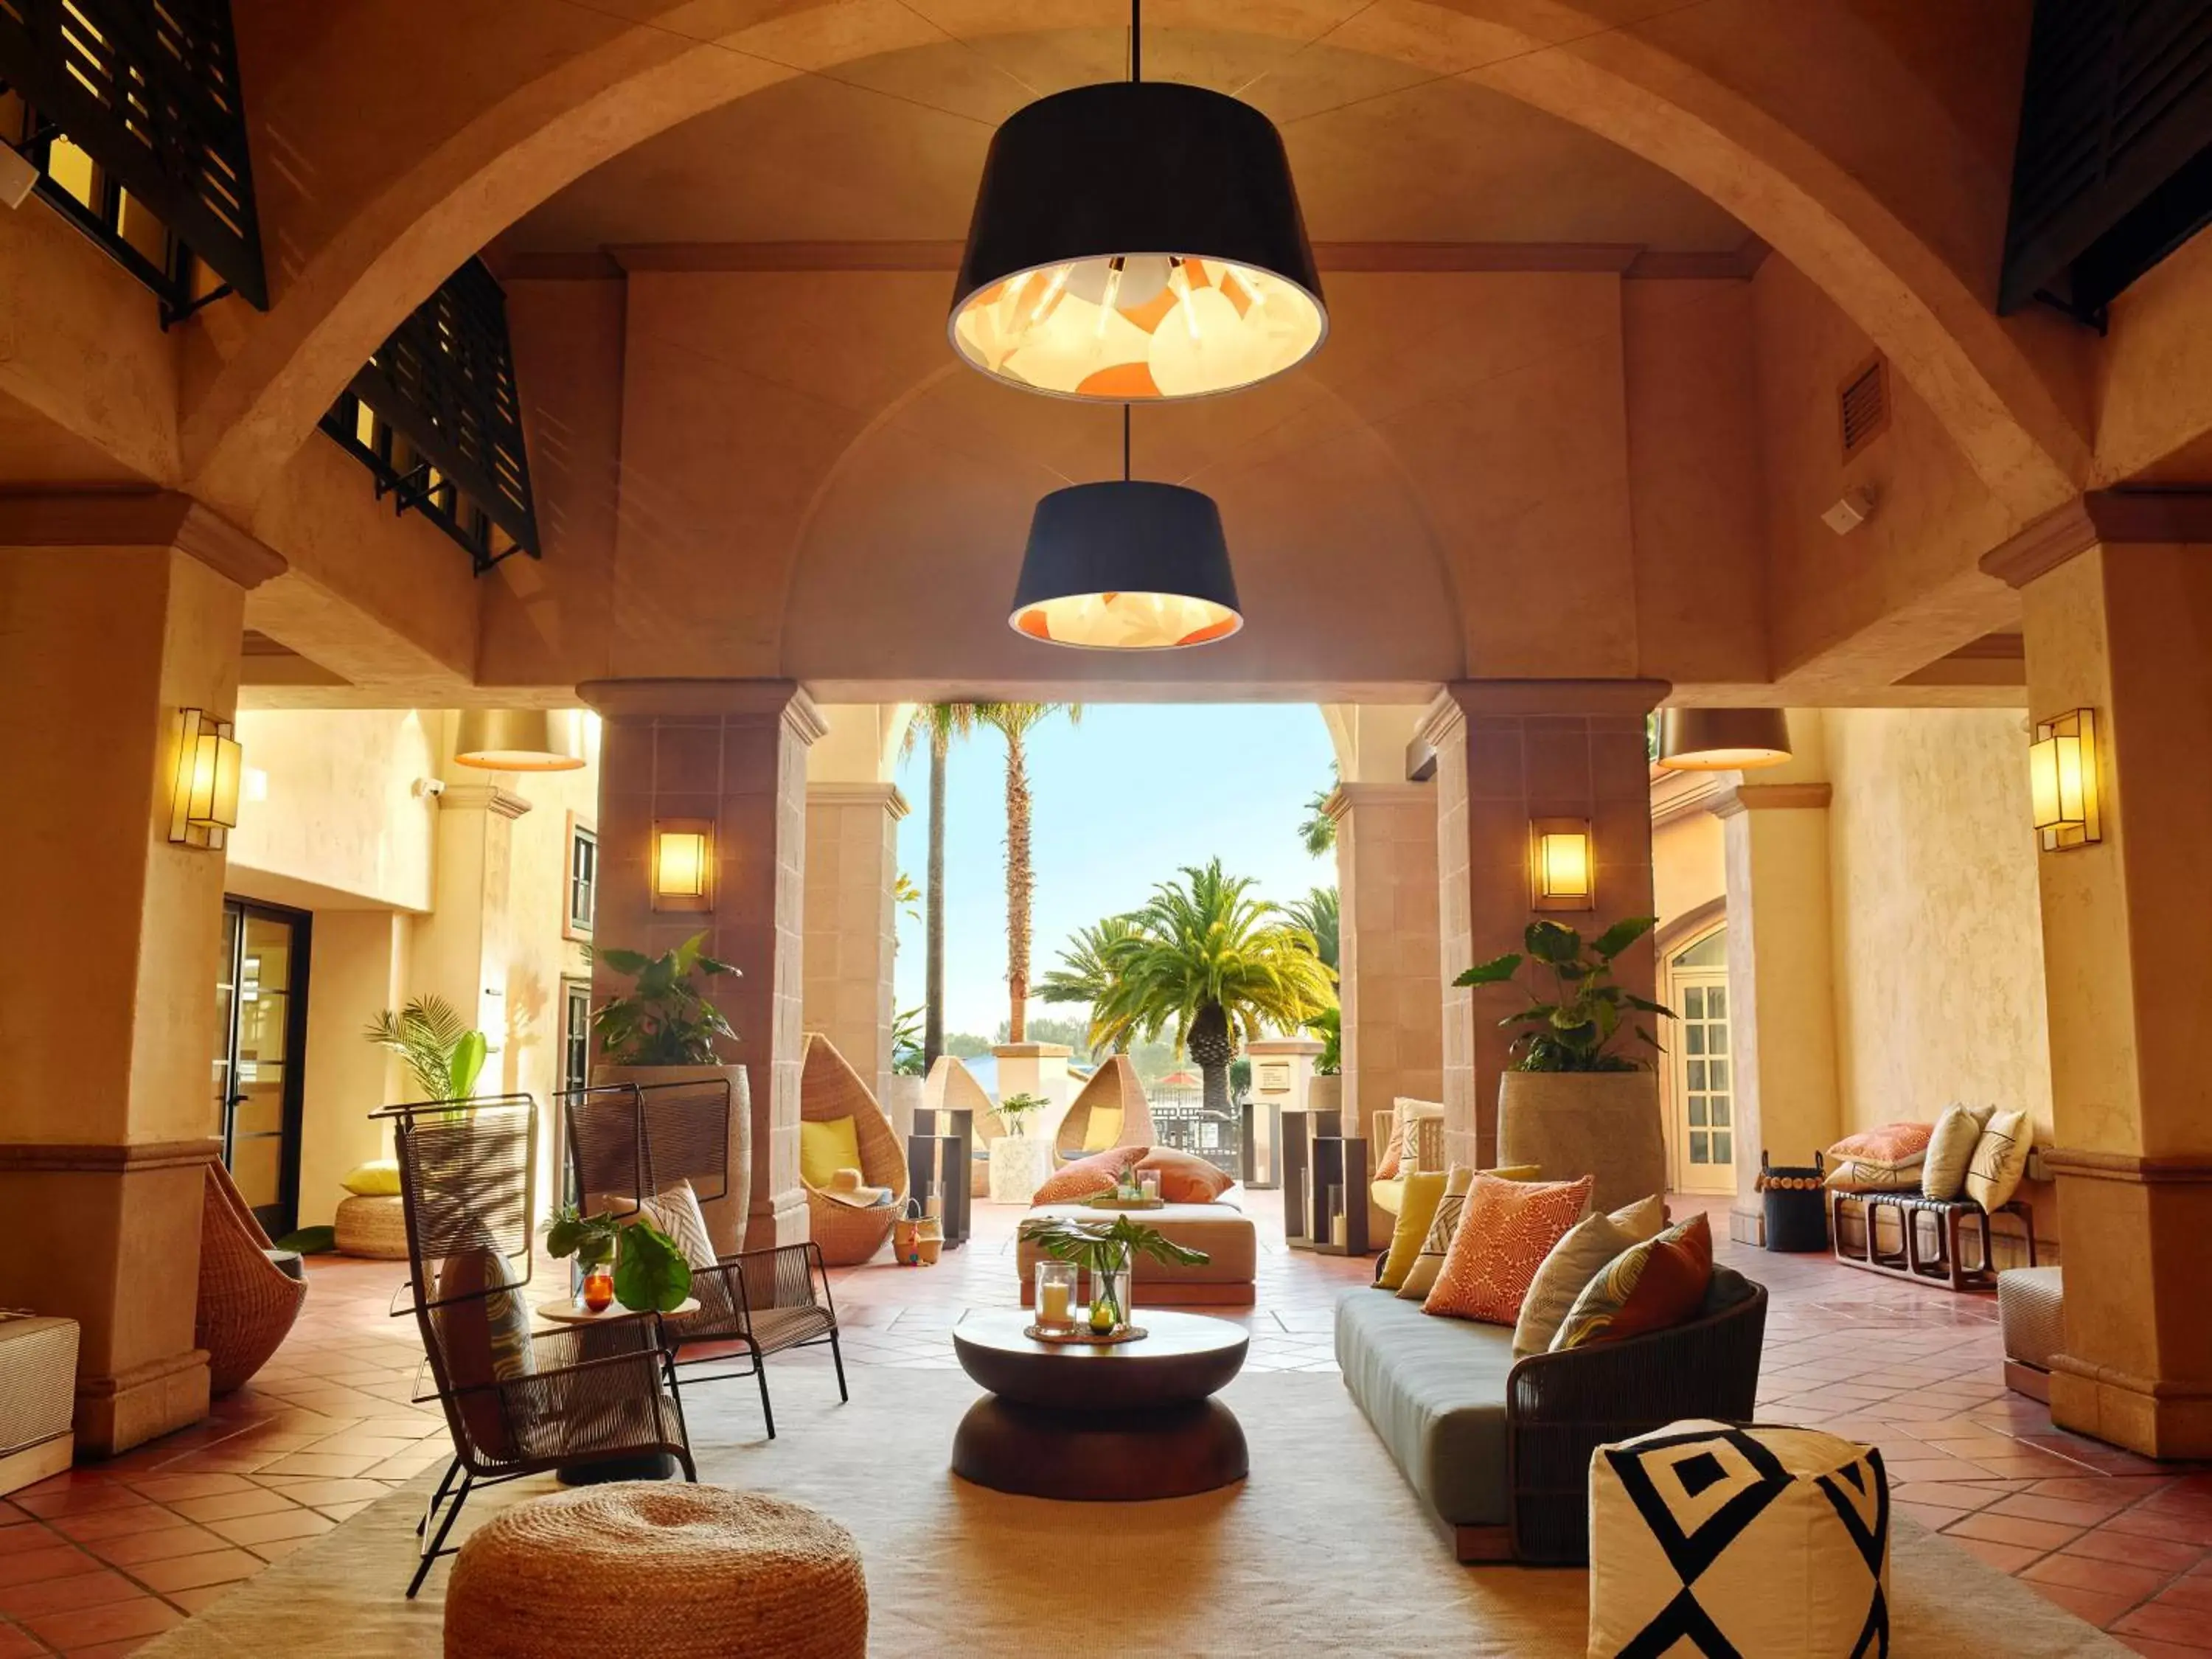 Lobby or reception in San Diego Mission Bay Resort